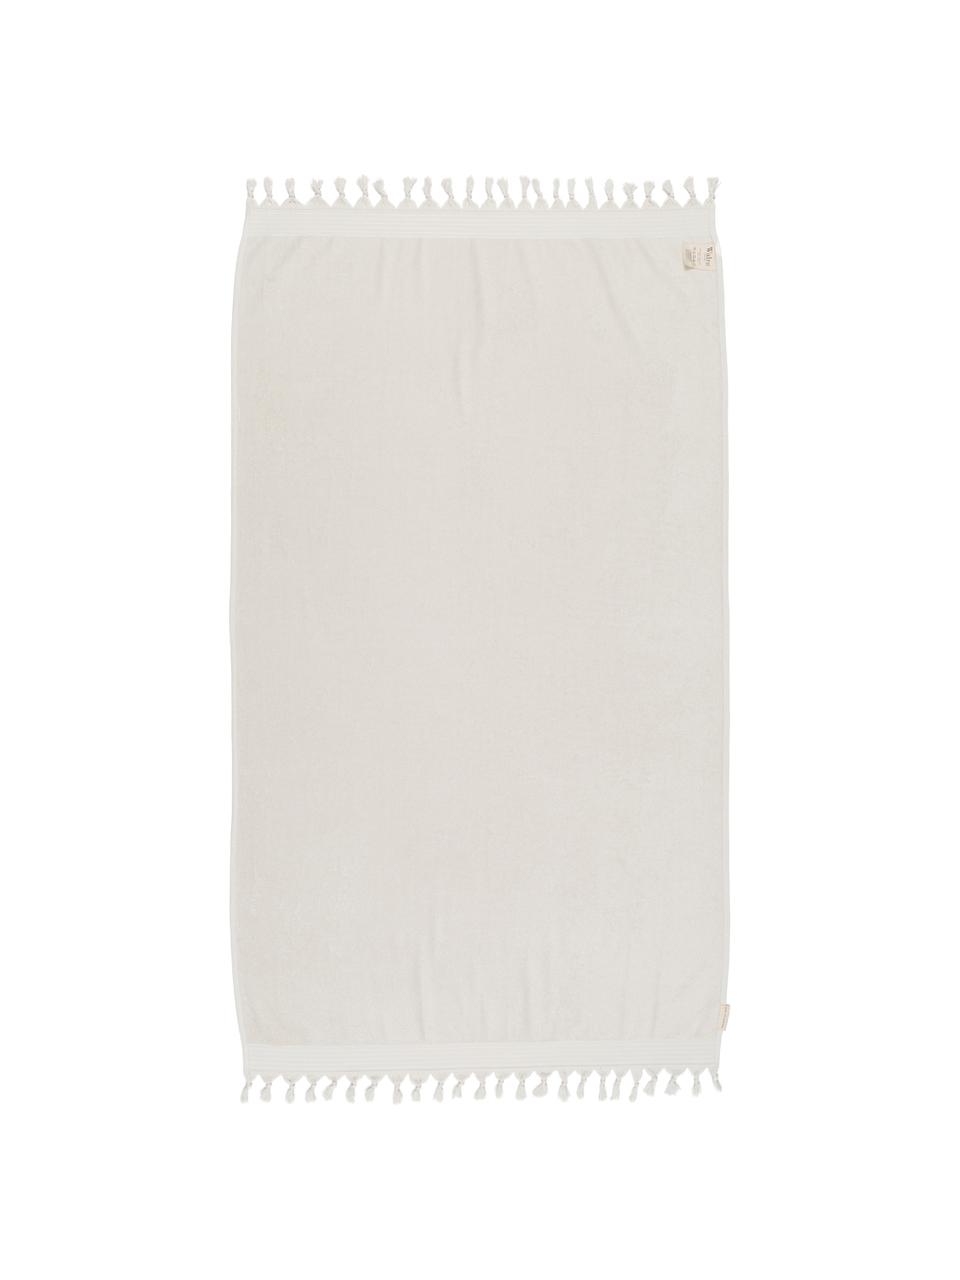 Telo mare Soft Cotton, Retro: Terry, Beige chiaro, bianco, Larg. 100 x Lung. 180 cm